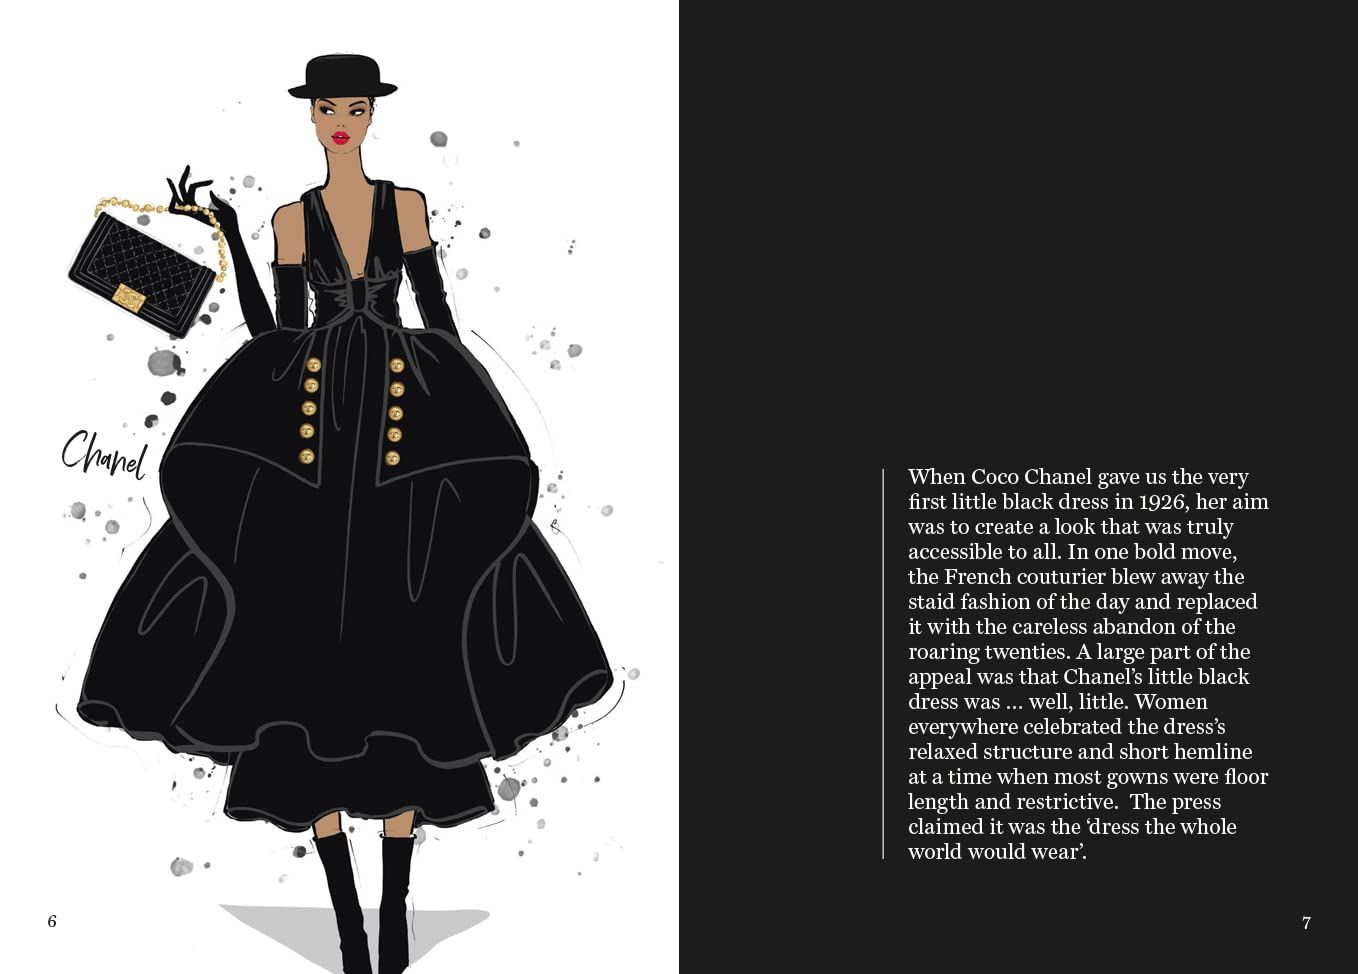  Megan Hess: The Little Black Dress_Megan Hess_9781743797358_Hardie Grant Books 